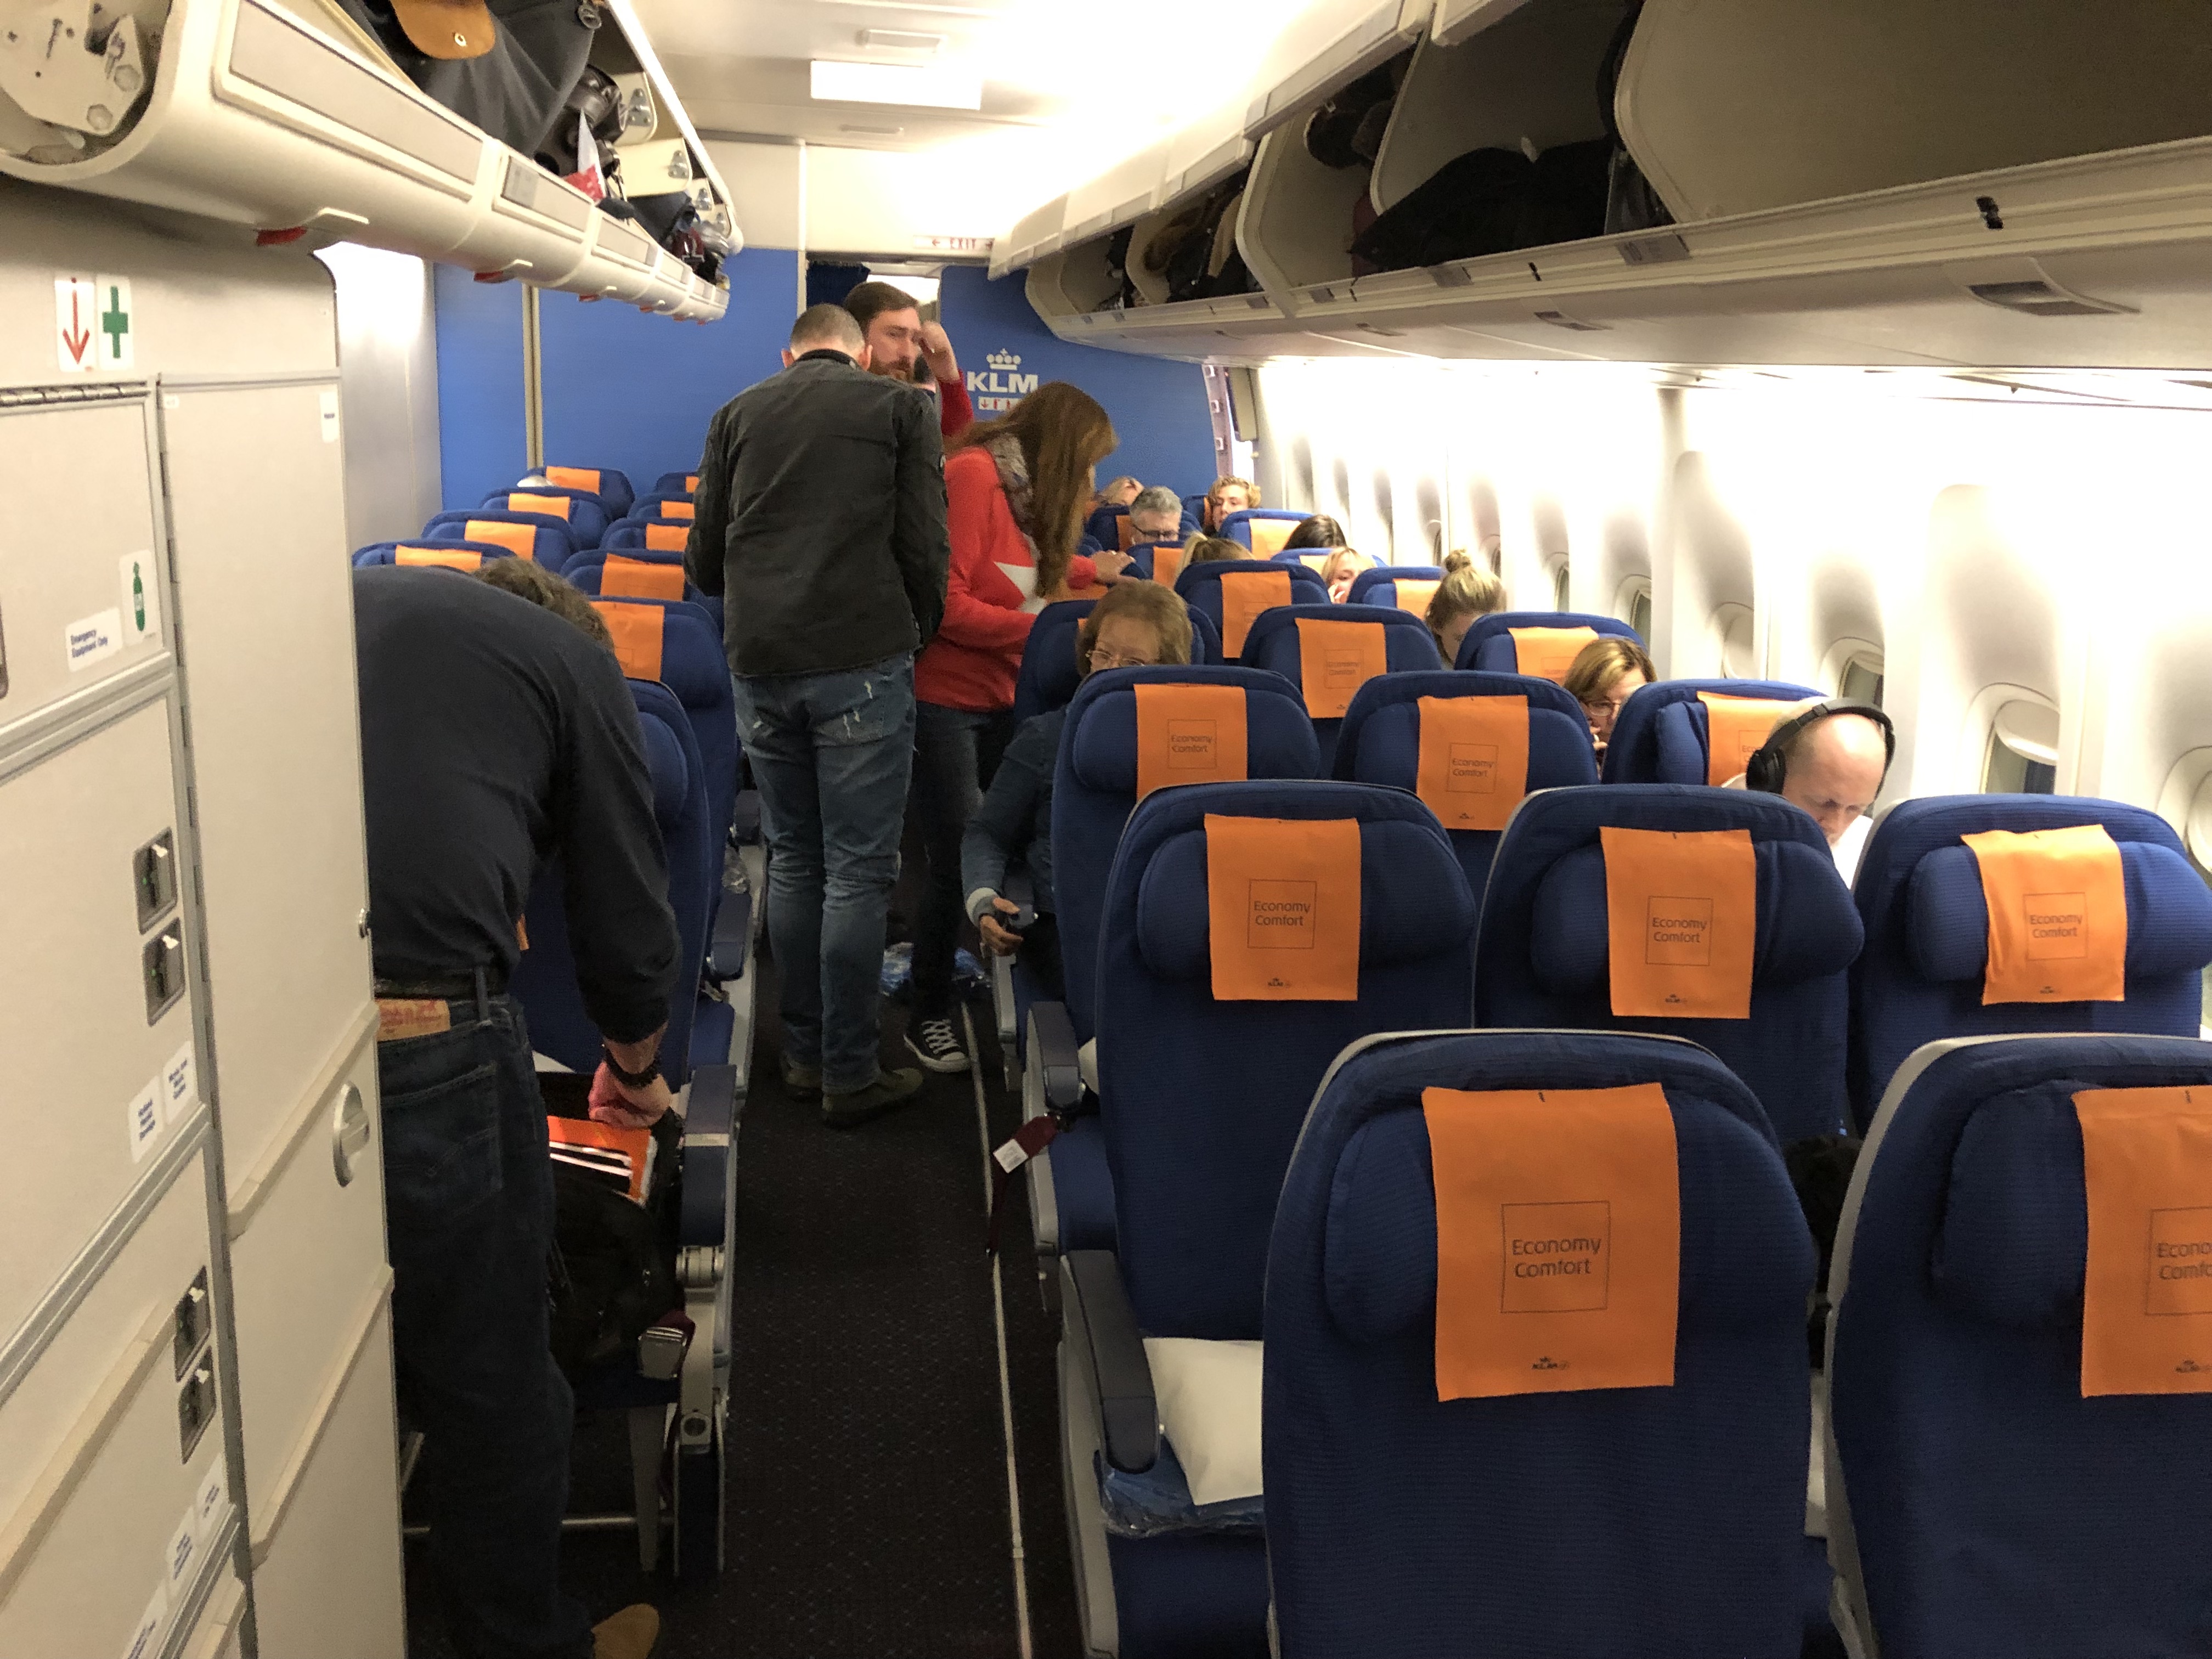 KLM Economy Comfort Cabin Boeing 747